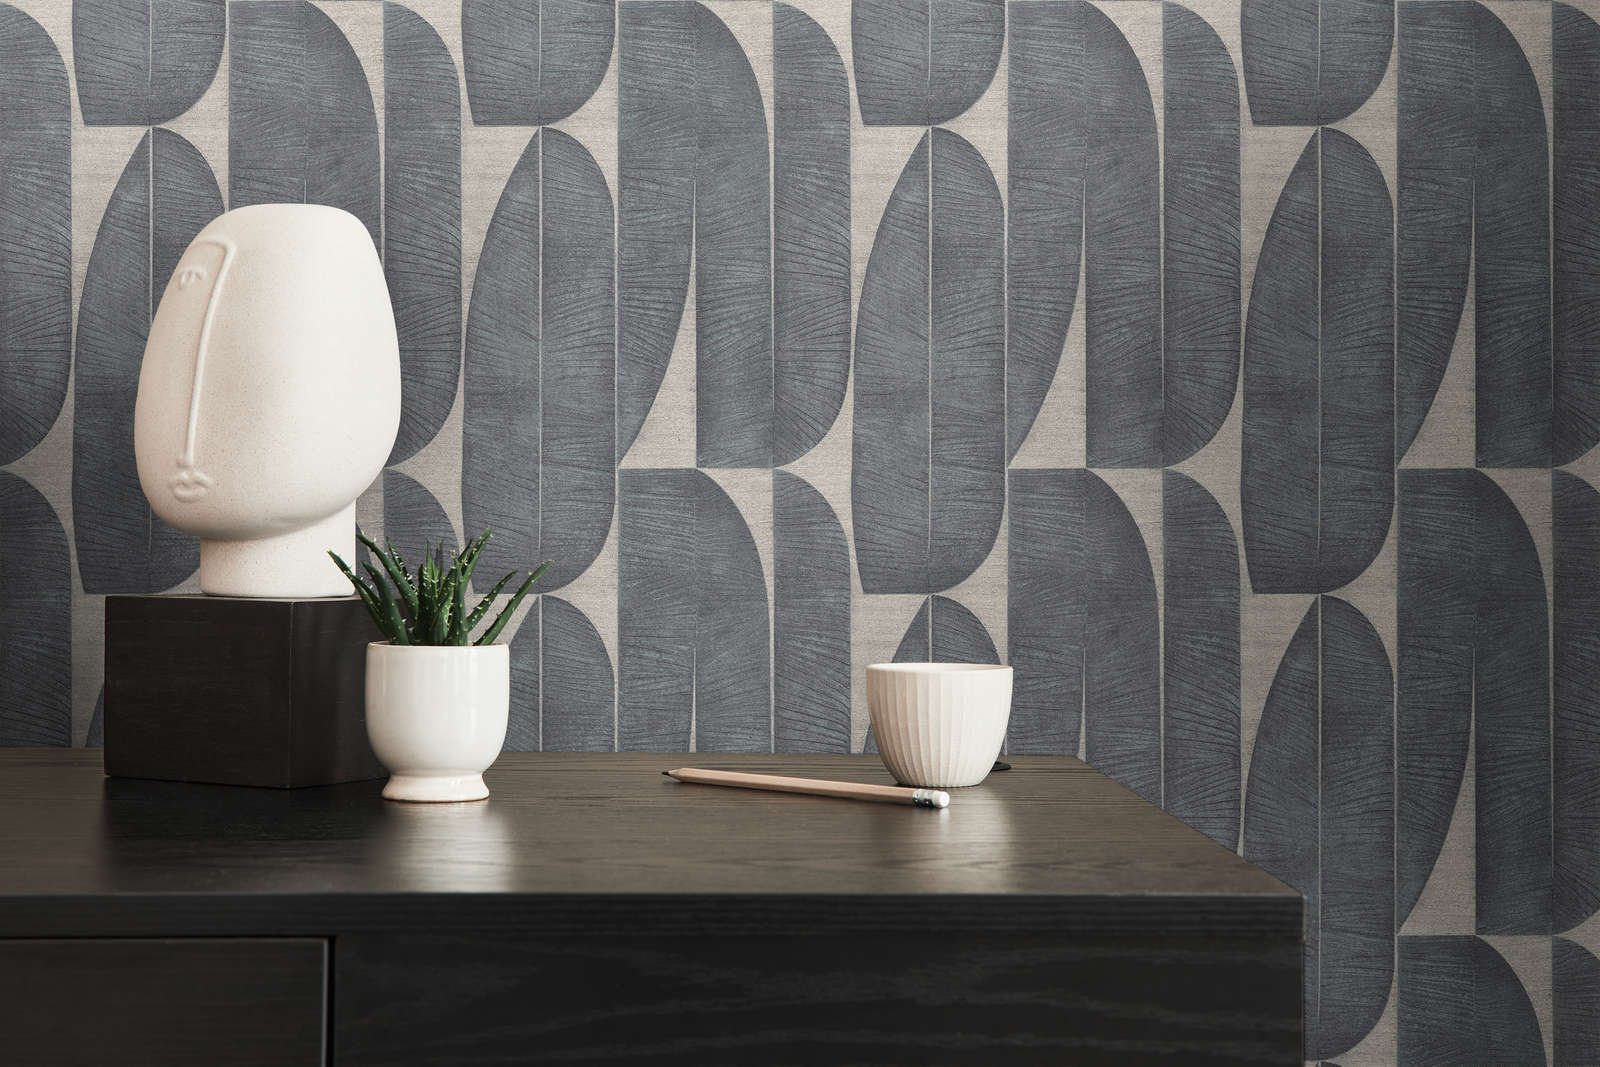             Non-woven wallpaper with geometric pattern in leaf look - beige, black
        